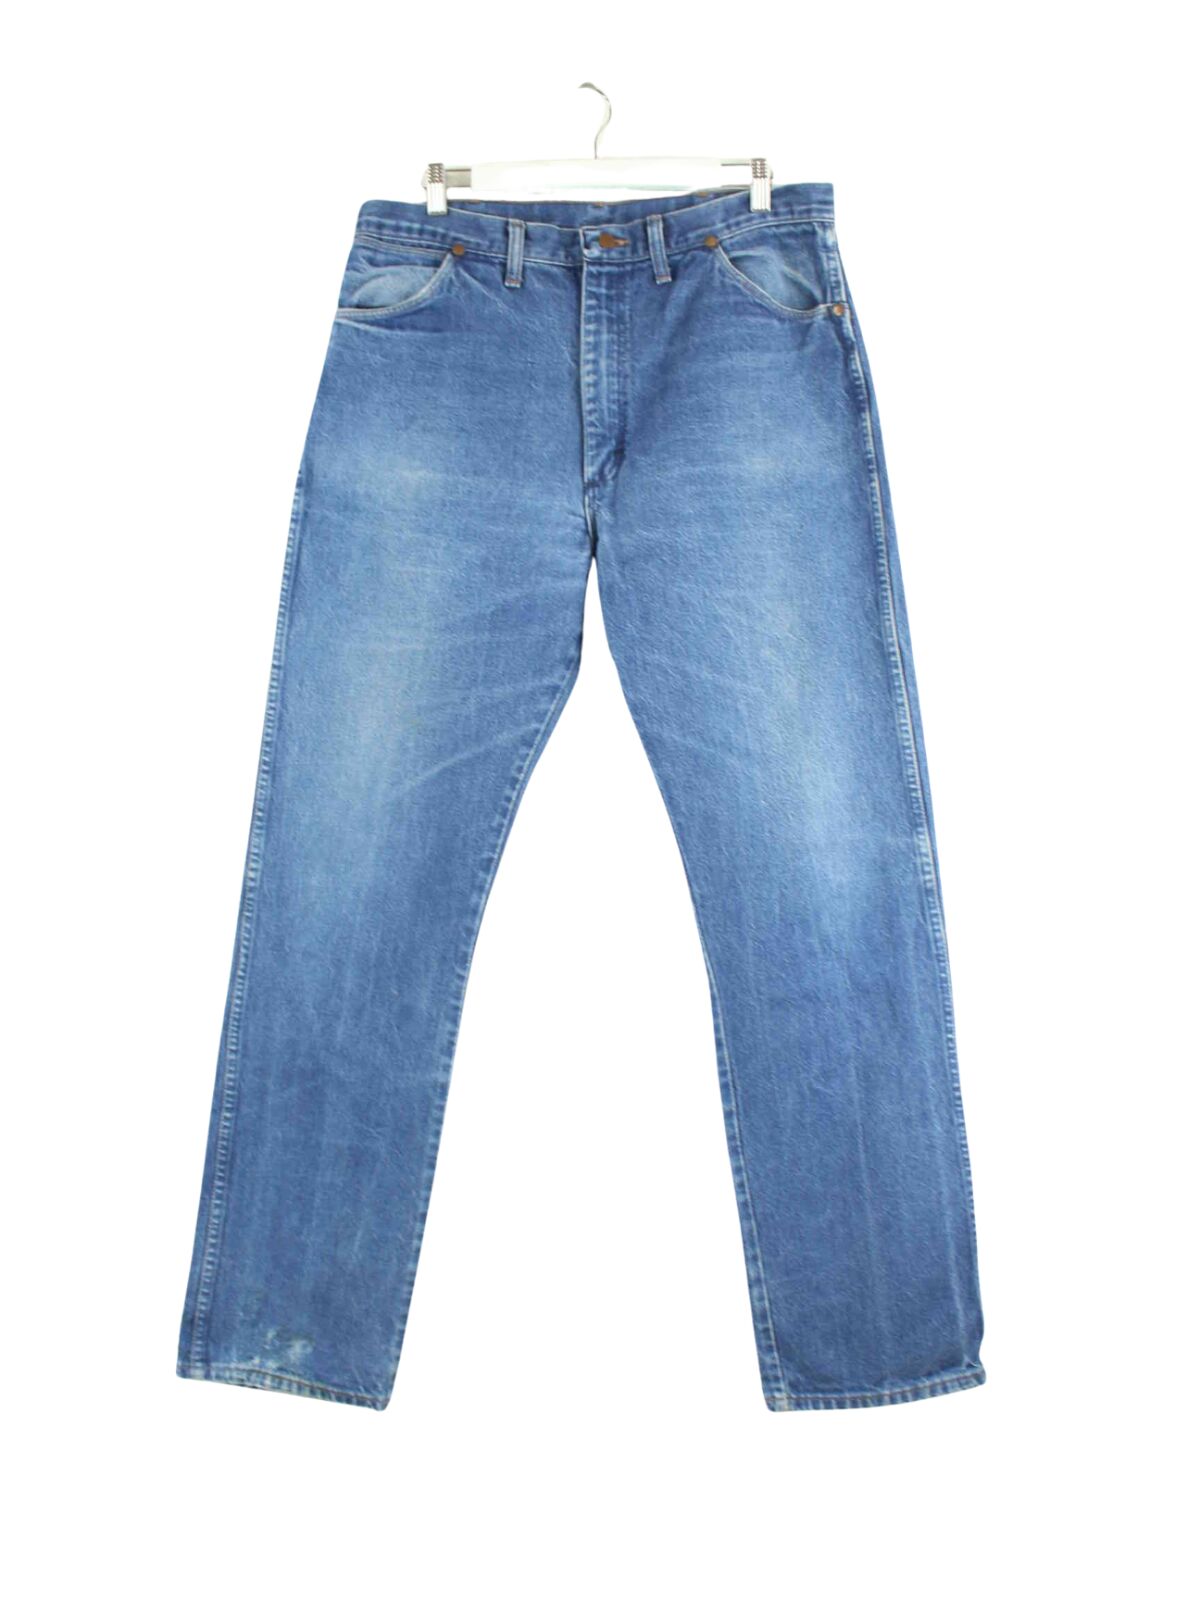 Wrangler 13MWZ 90s Vintage Jeans Blau W38 L34 (front image)